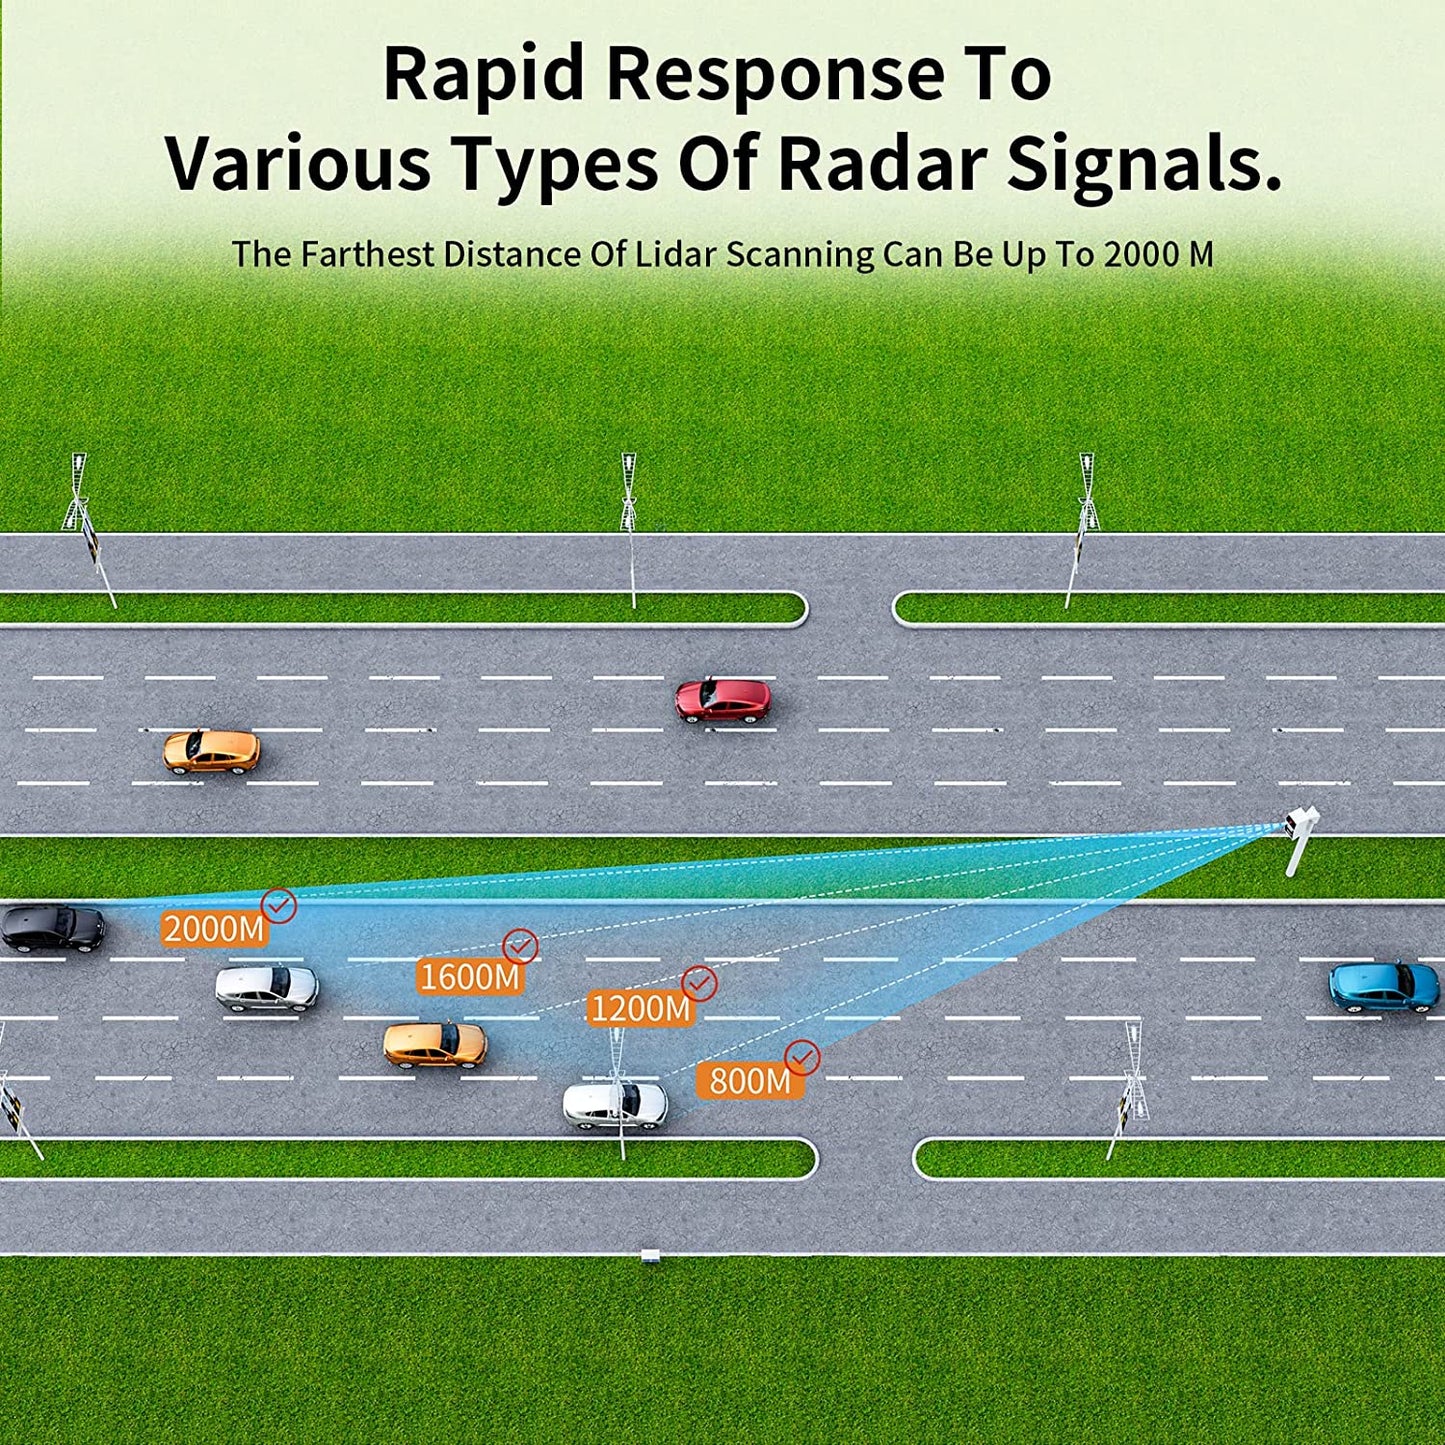 Spedal DSP Laser Radar Detectors for Cars